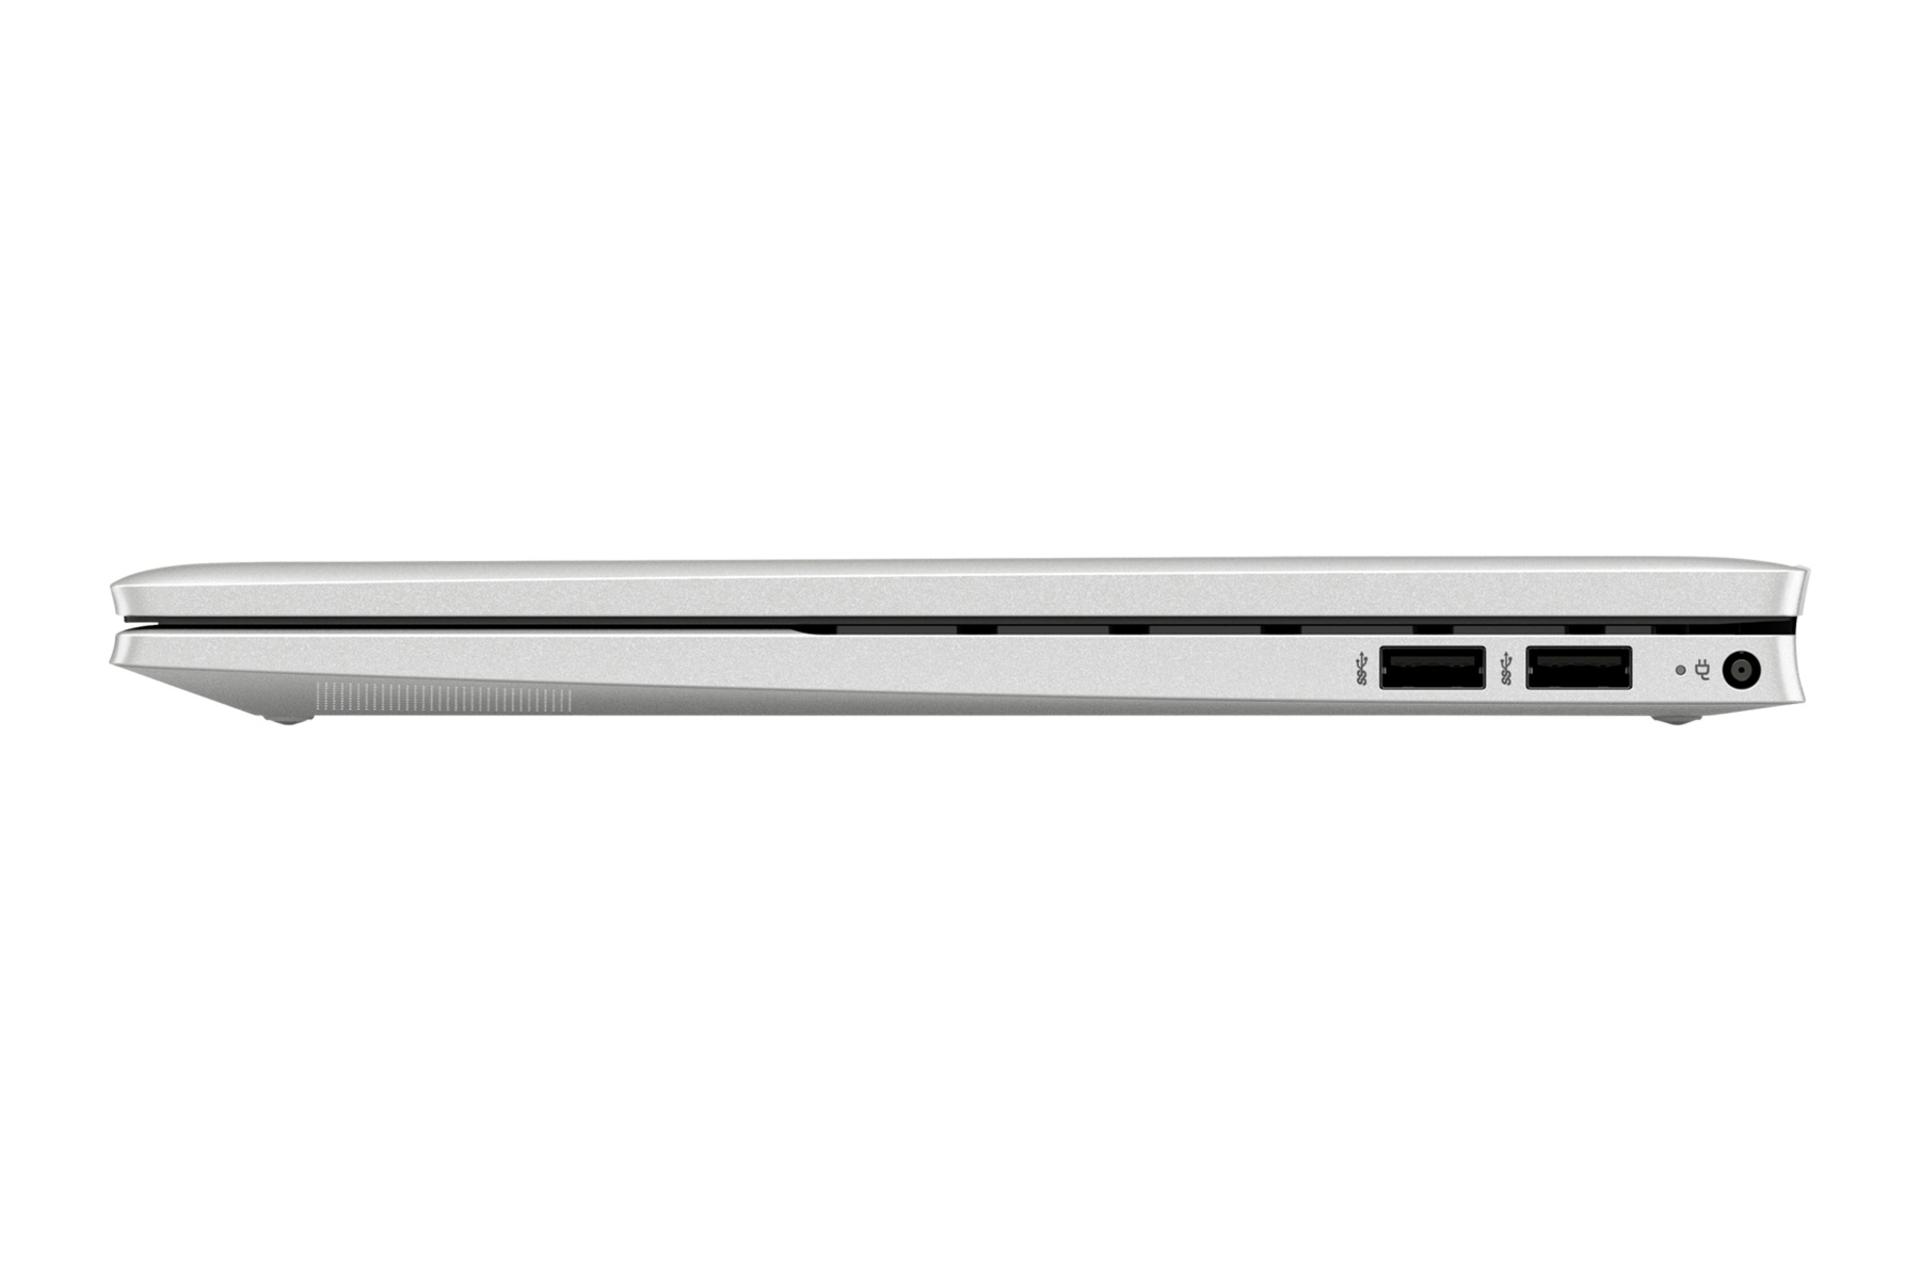 نمای کنار لپ تاپ لپ تاپ اچ پی پاویلیون X360 Convertible 14t-dy100 و نمایش پورت ها